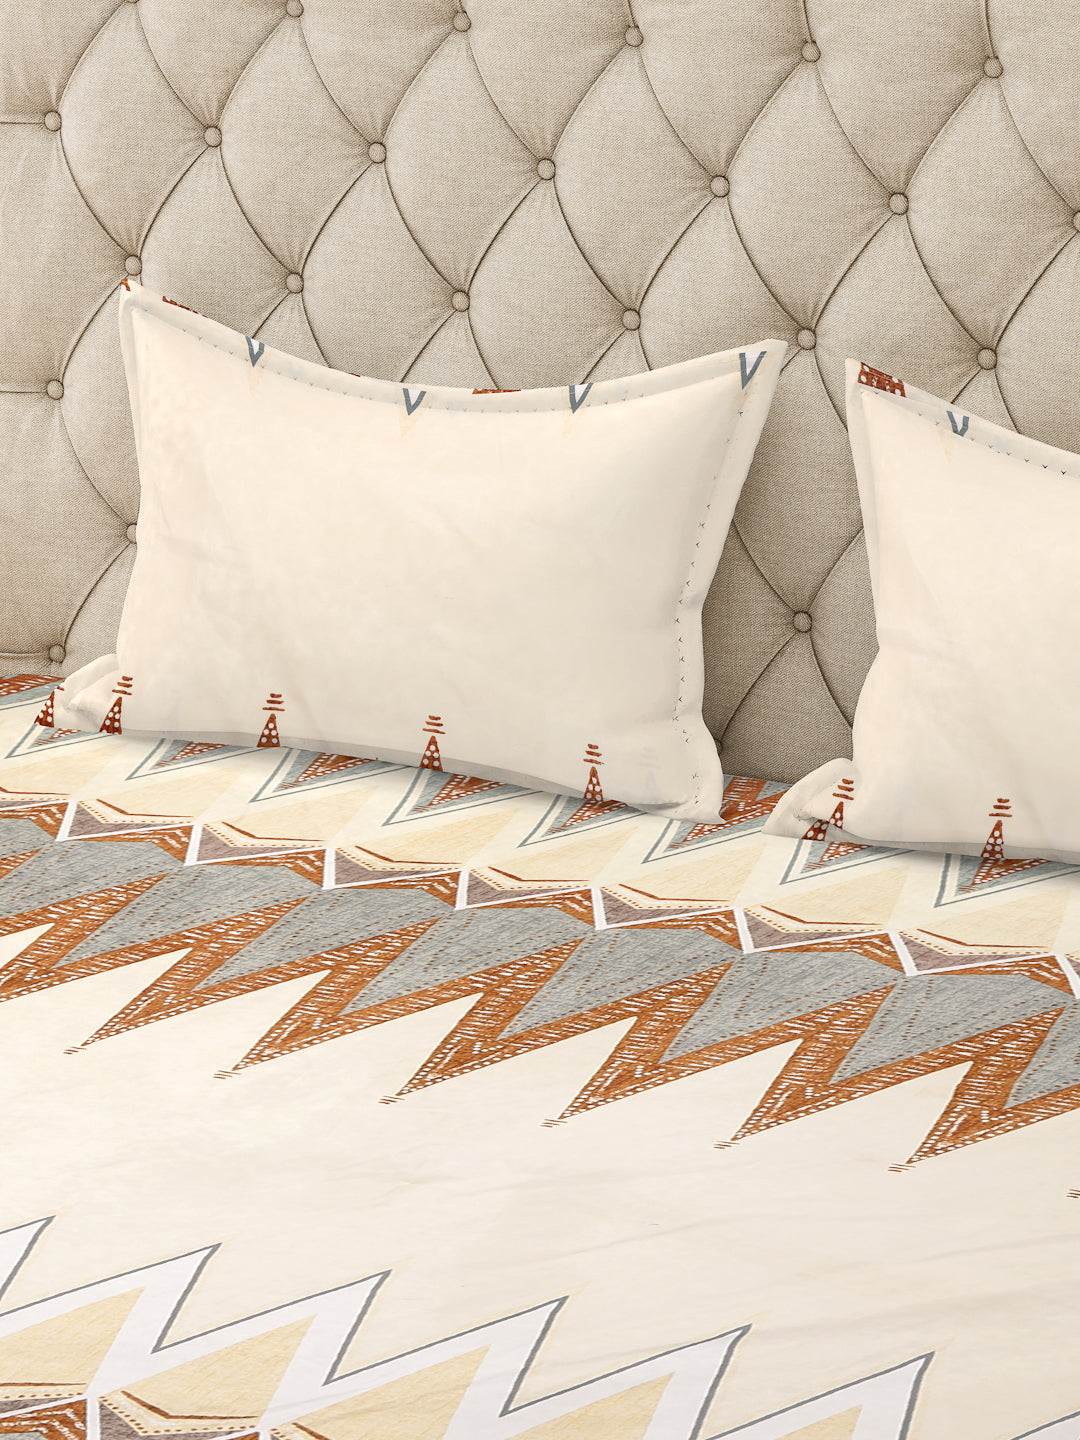 Arrabi Cream Graphic TC Cotton Blend Super King Size Bedsheet with 2 Pillow Covers (270 x 260 cm)